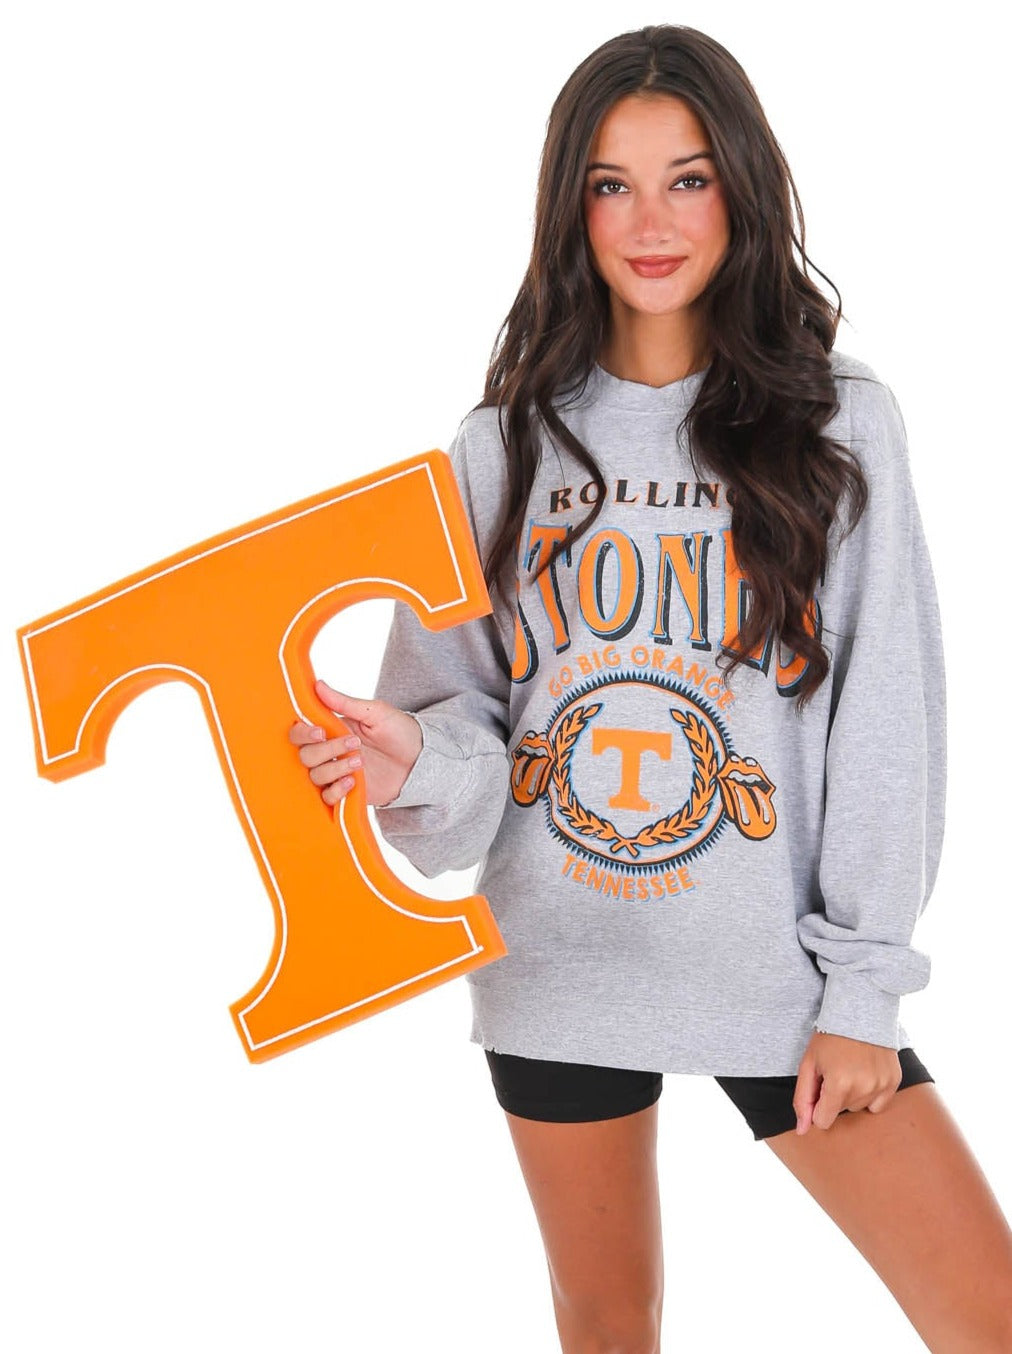 Rolling Stones Tennessee Volunteers College Seal Thrifted Sweatshirt